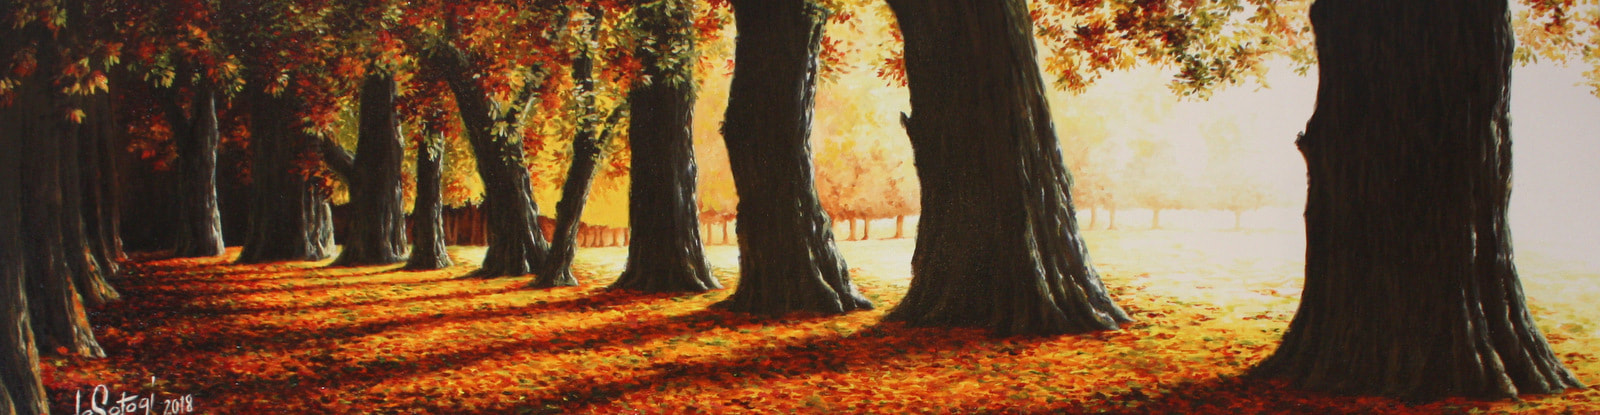 Dave Sotogi- "Autumn Light", Oil on Canvas, 470 x 1500mm, 2018